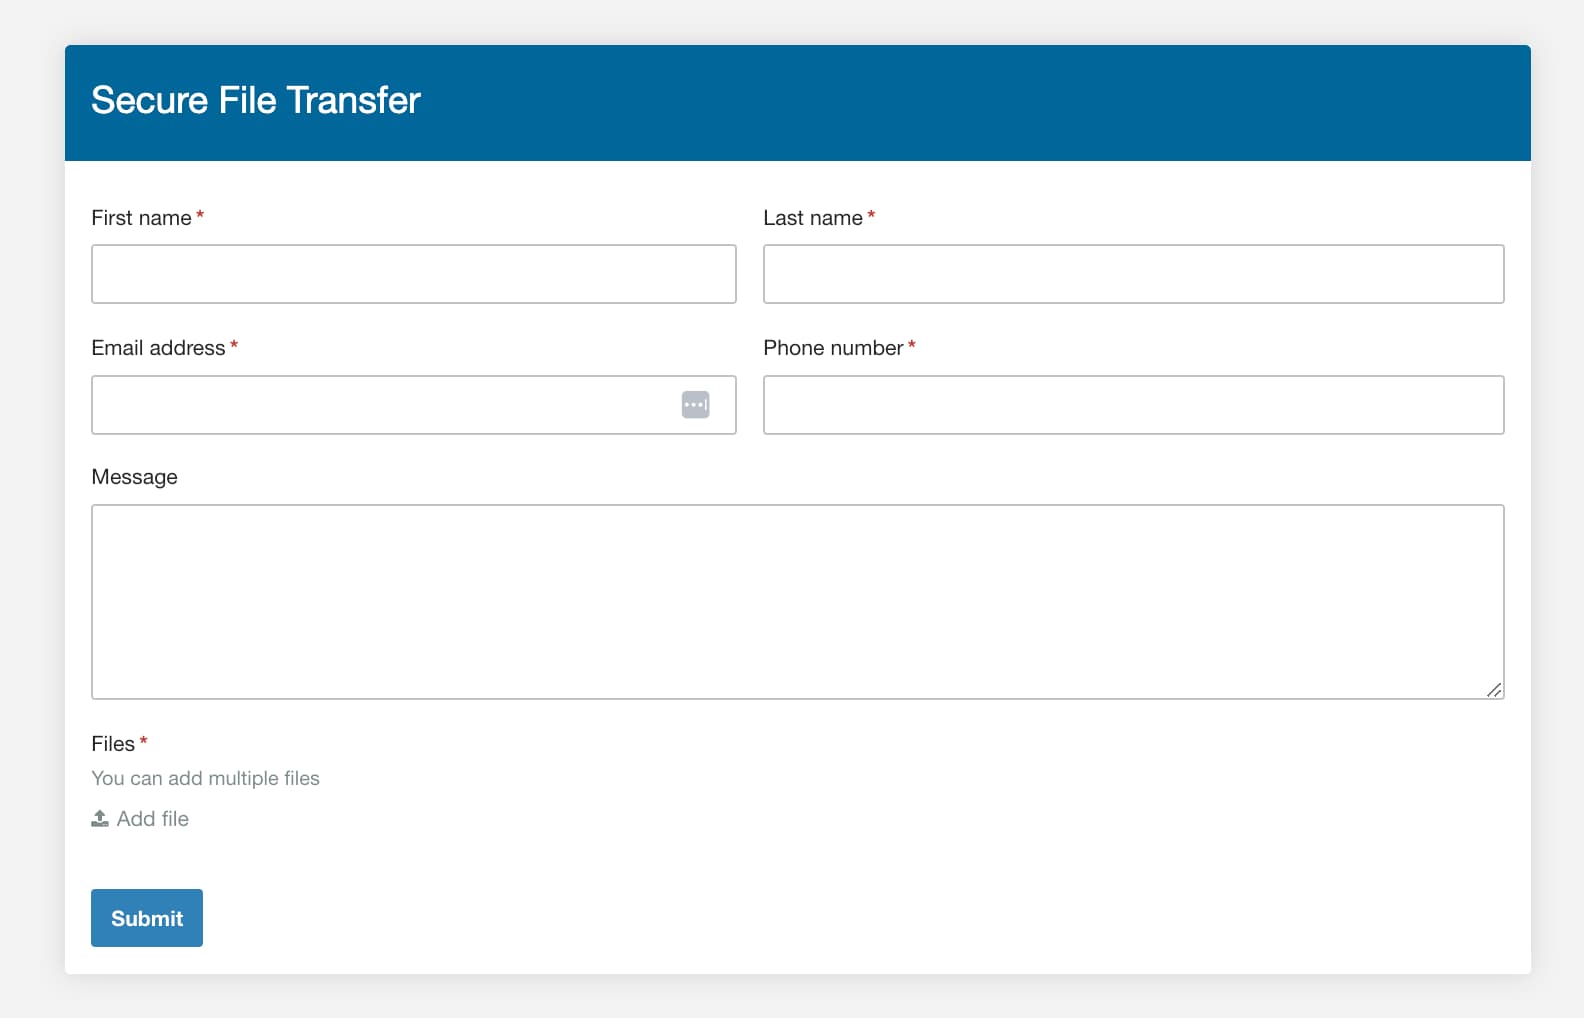 Secure File Transfer form